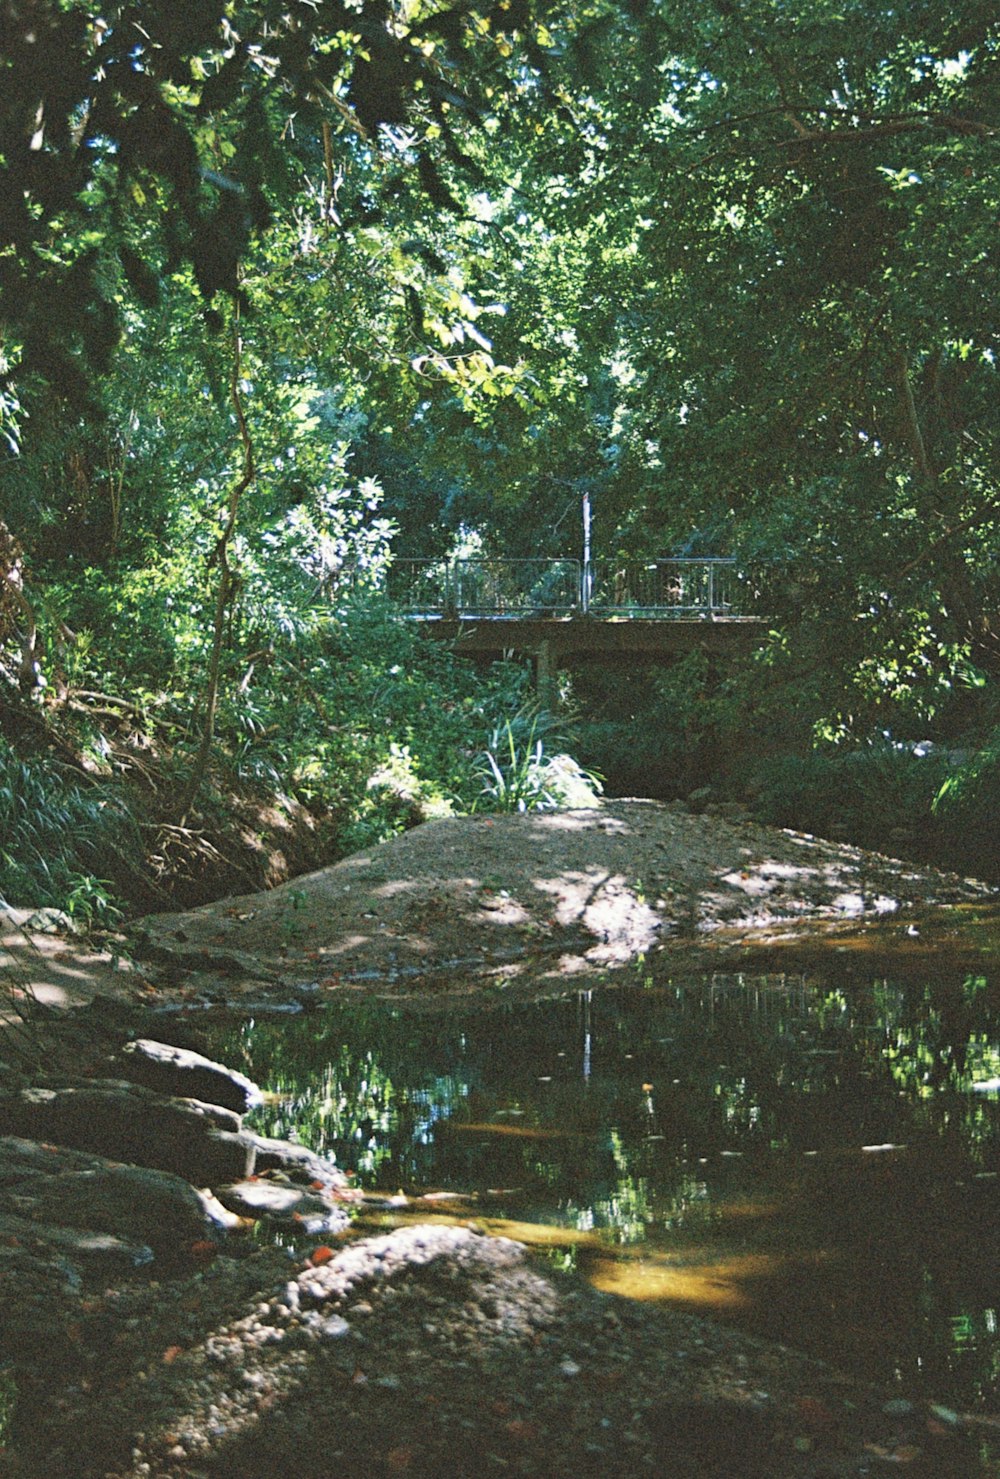 a bridge over a small stream in a forest